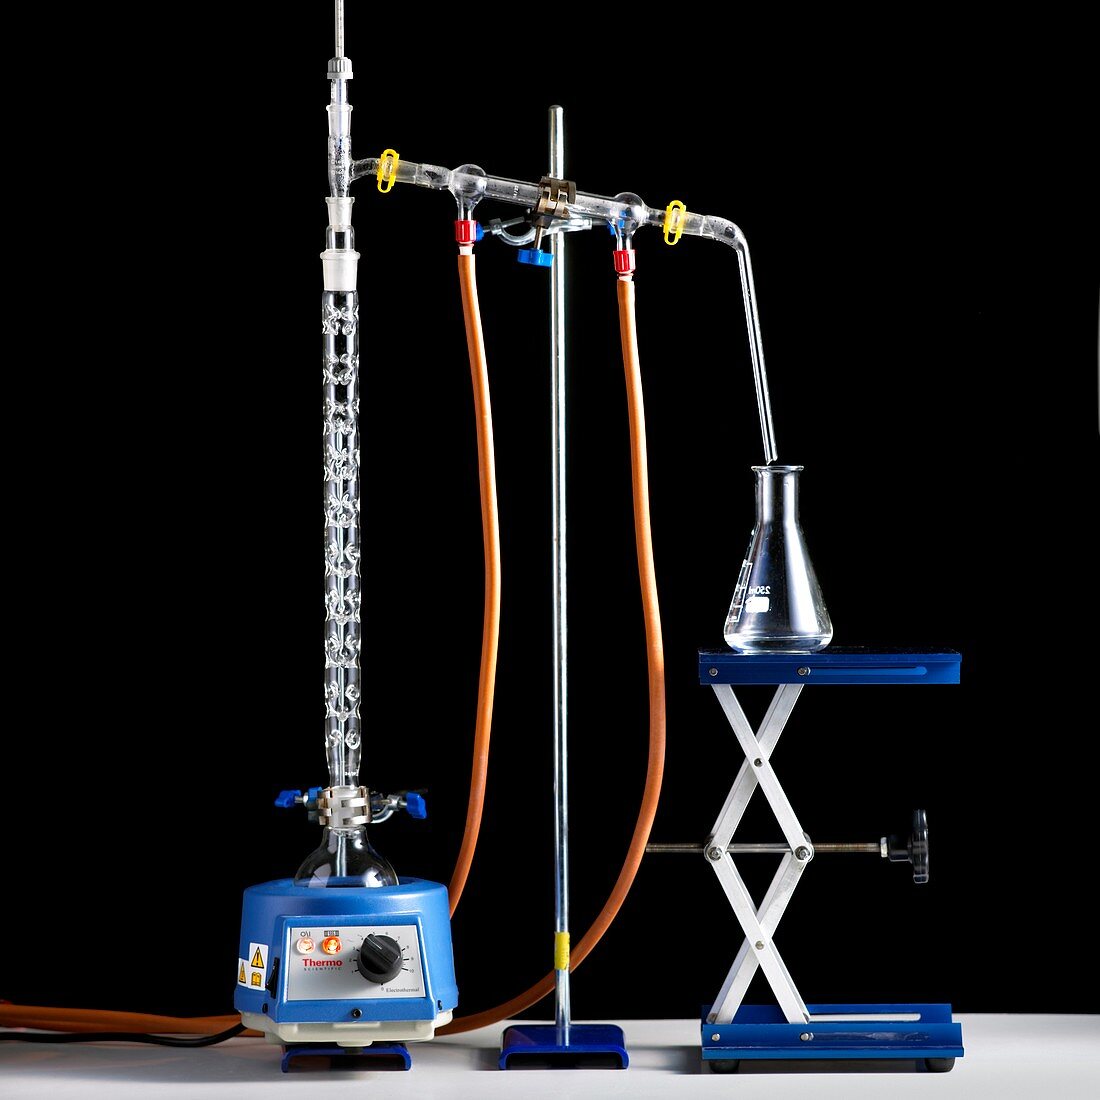 Fractional distillation apparatus